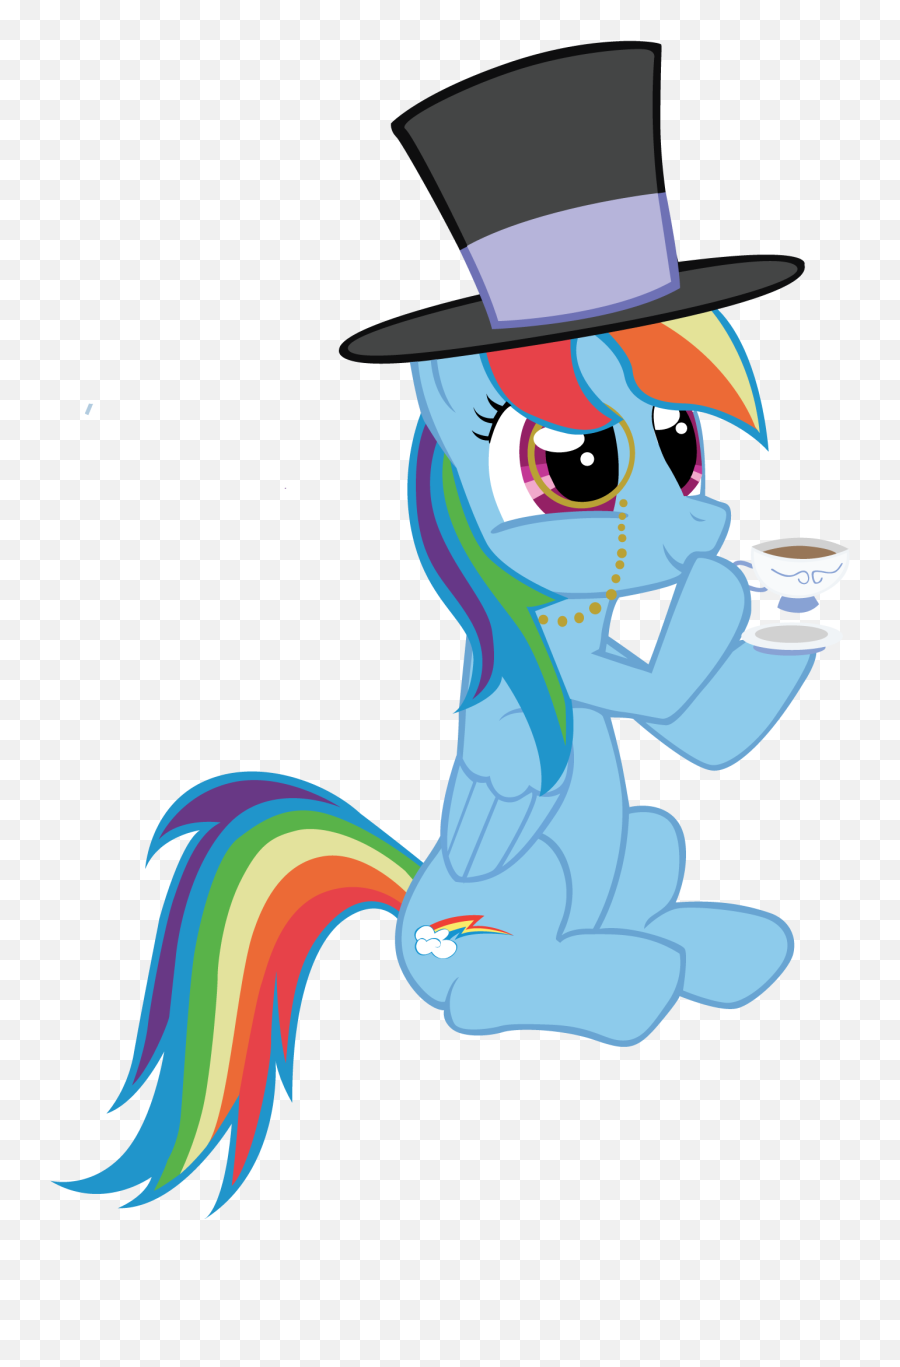 I Am The New Pony Timelord - Welcome Plaza Mlp Forums Emoji,Sip Tea Emoji